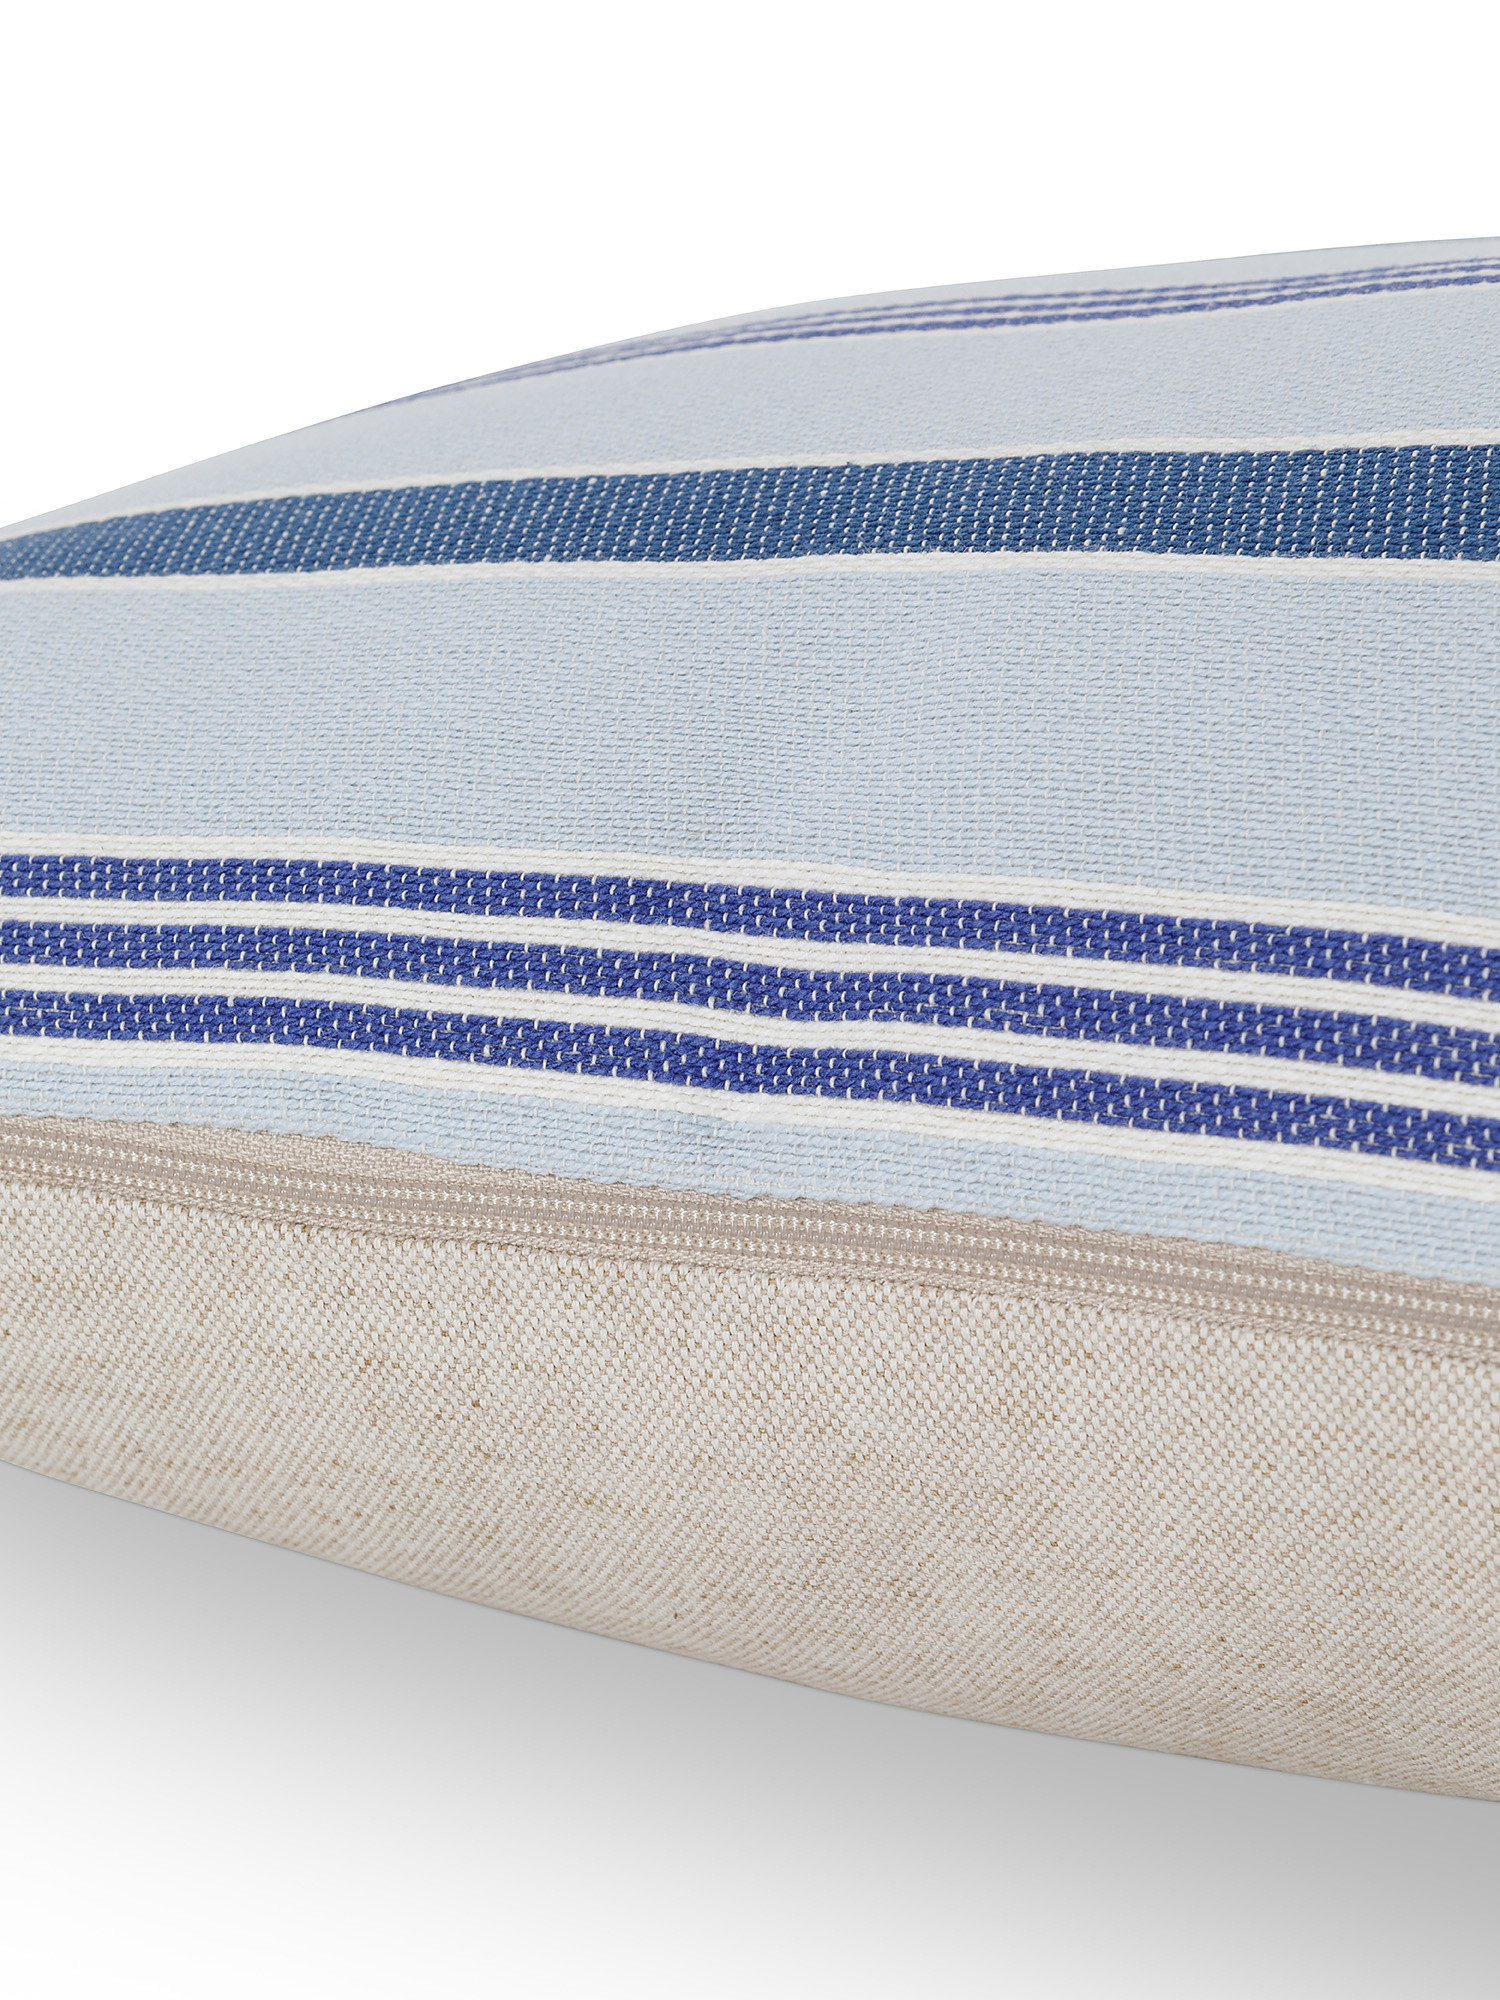 Striped jacquard cushion 35x55cm, Blue, large image number 2